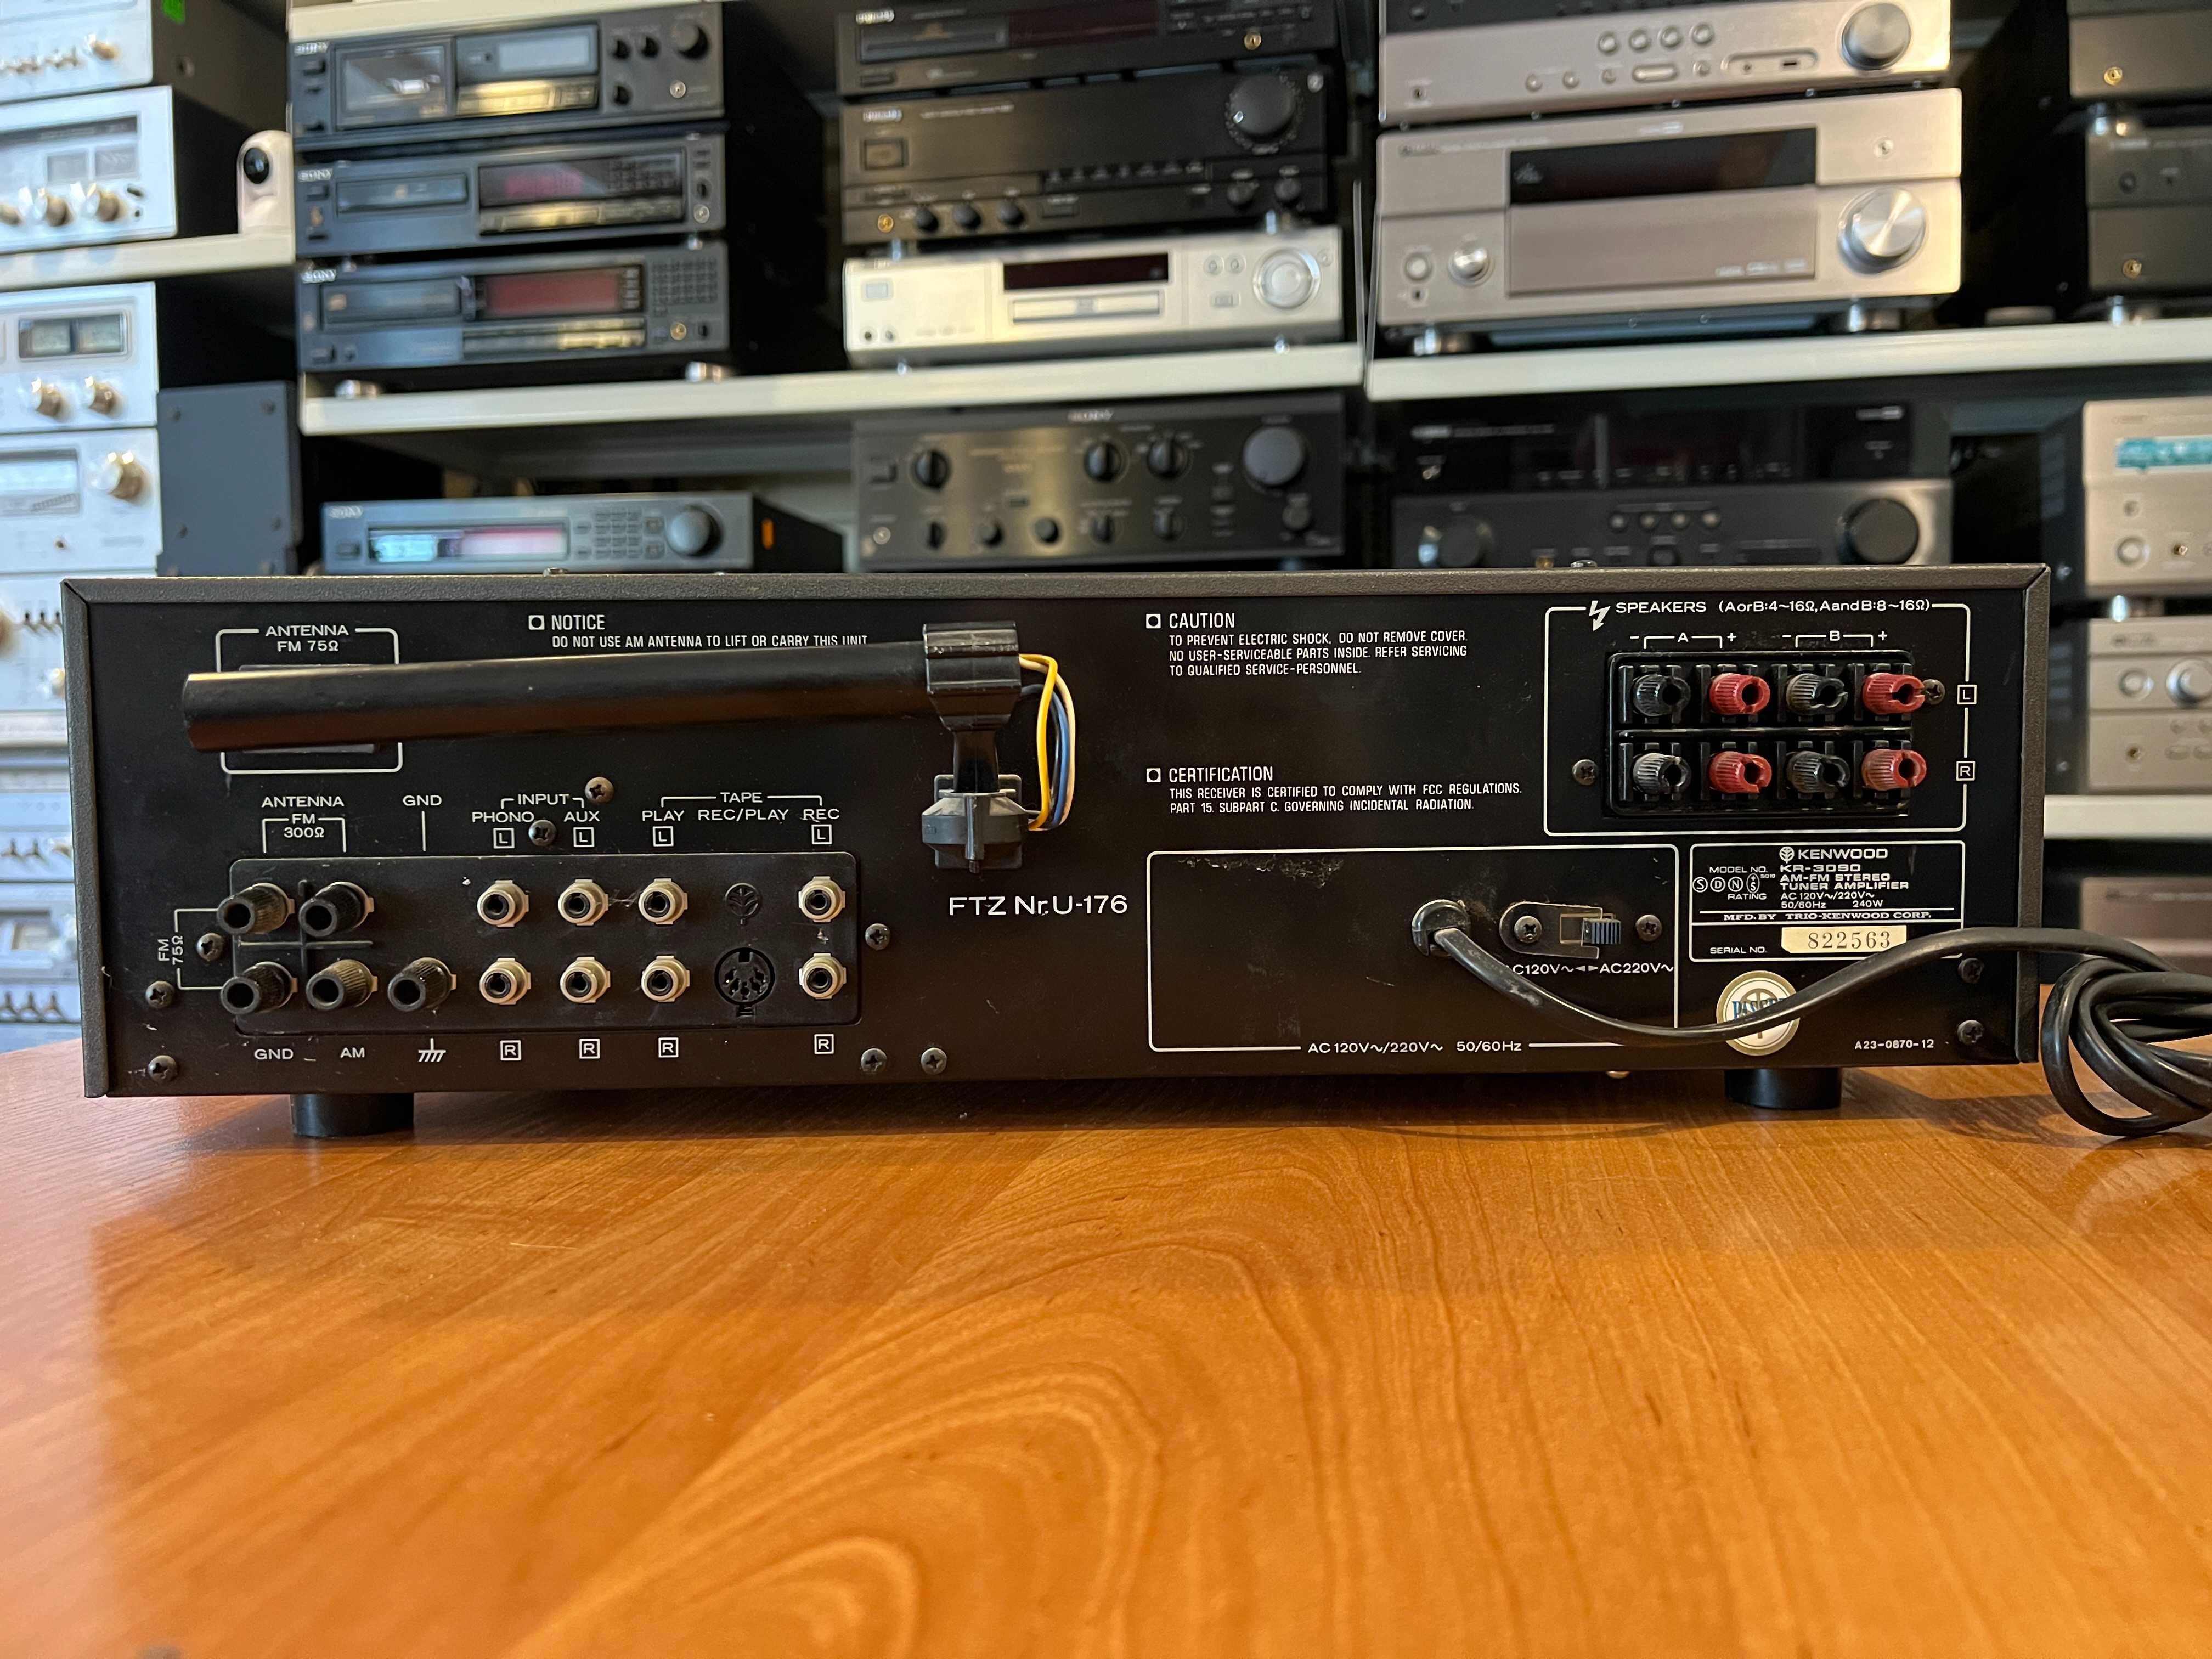 Amplituner Kenwood KR-3090 Vintage, Audio Room